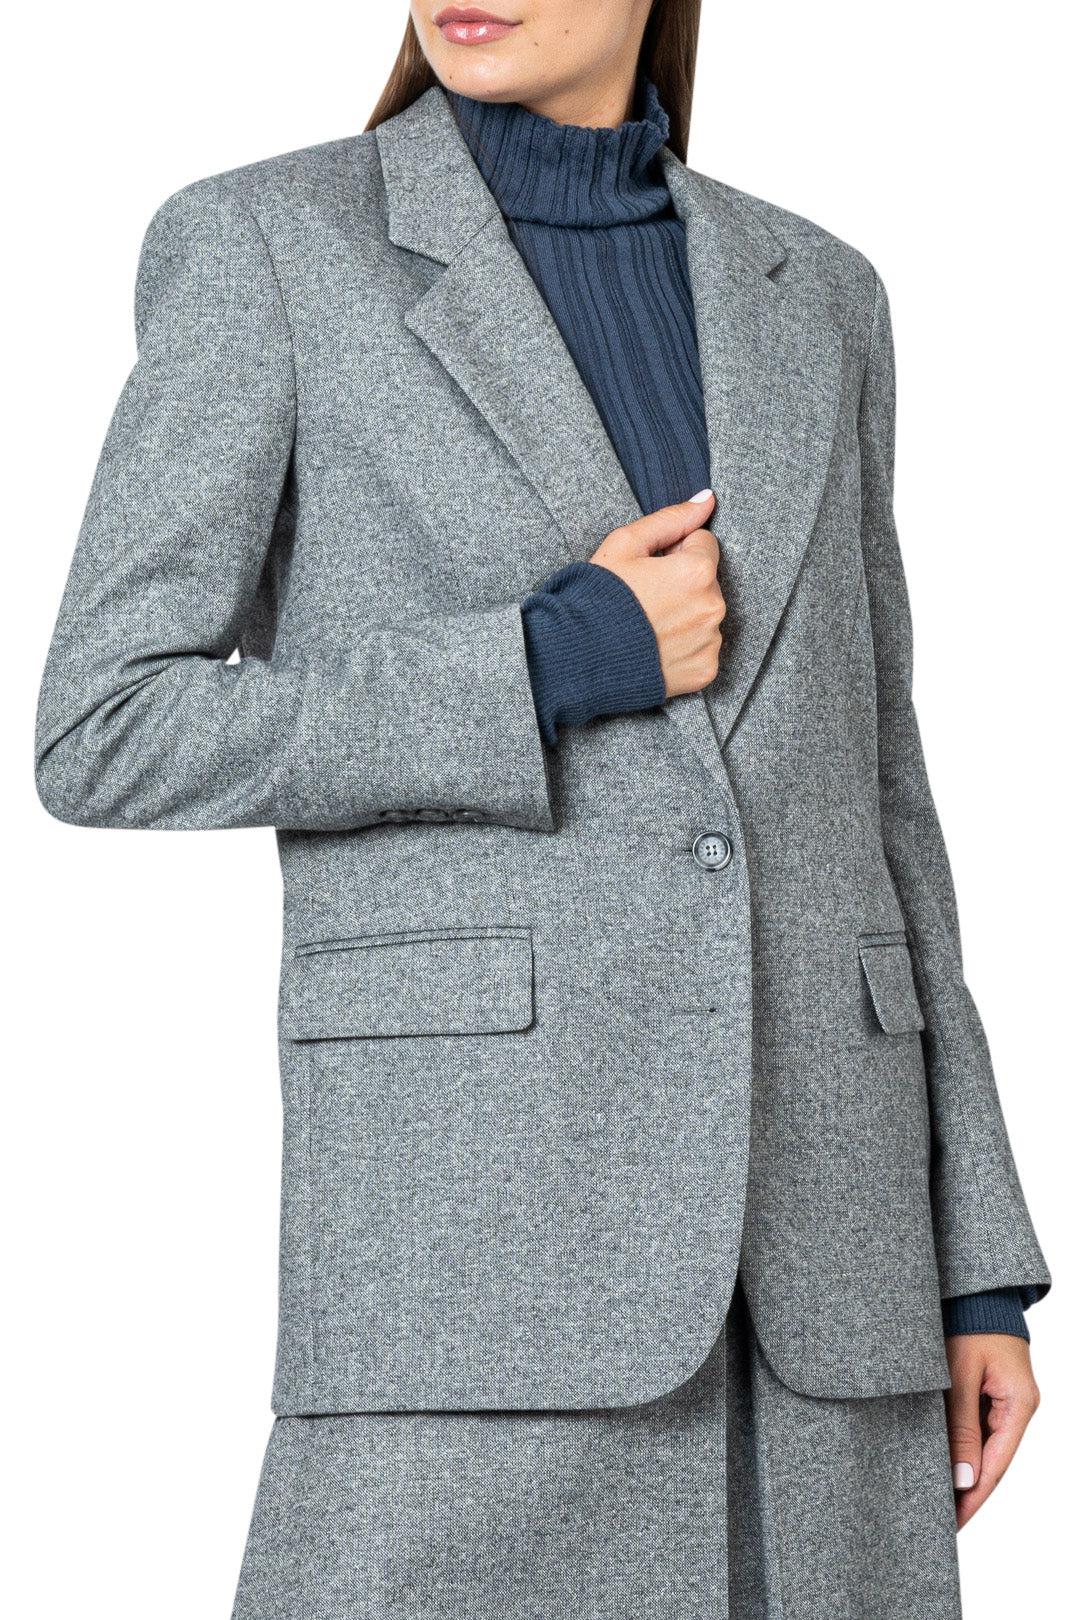 Lebrand-Wool and silk tailored blazer jacket-F21-25 PRAT JACKET-dgallerystore